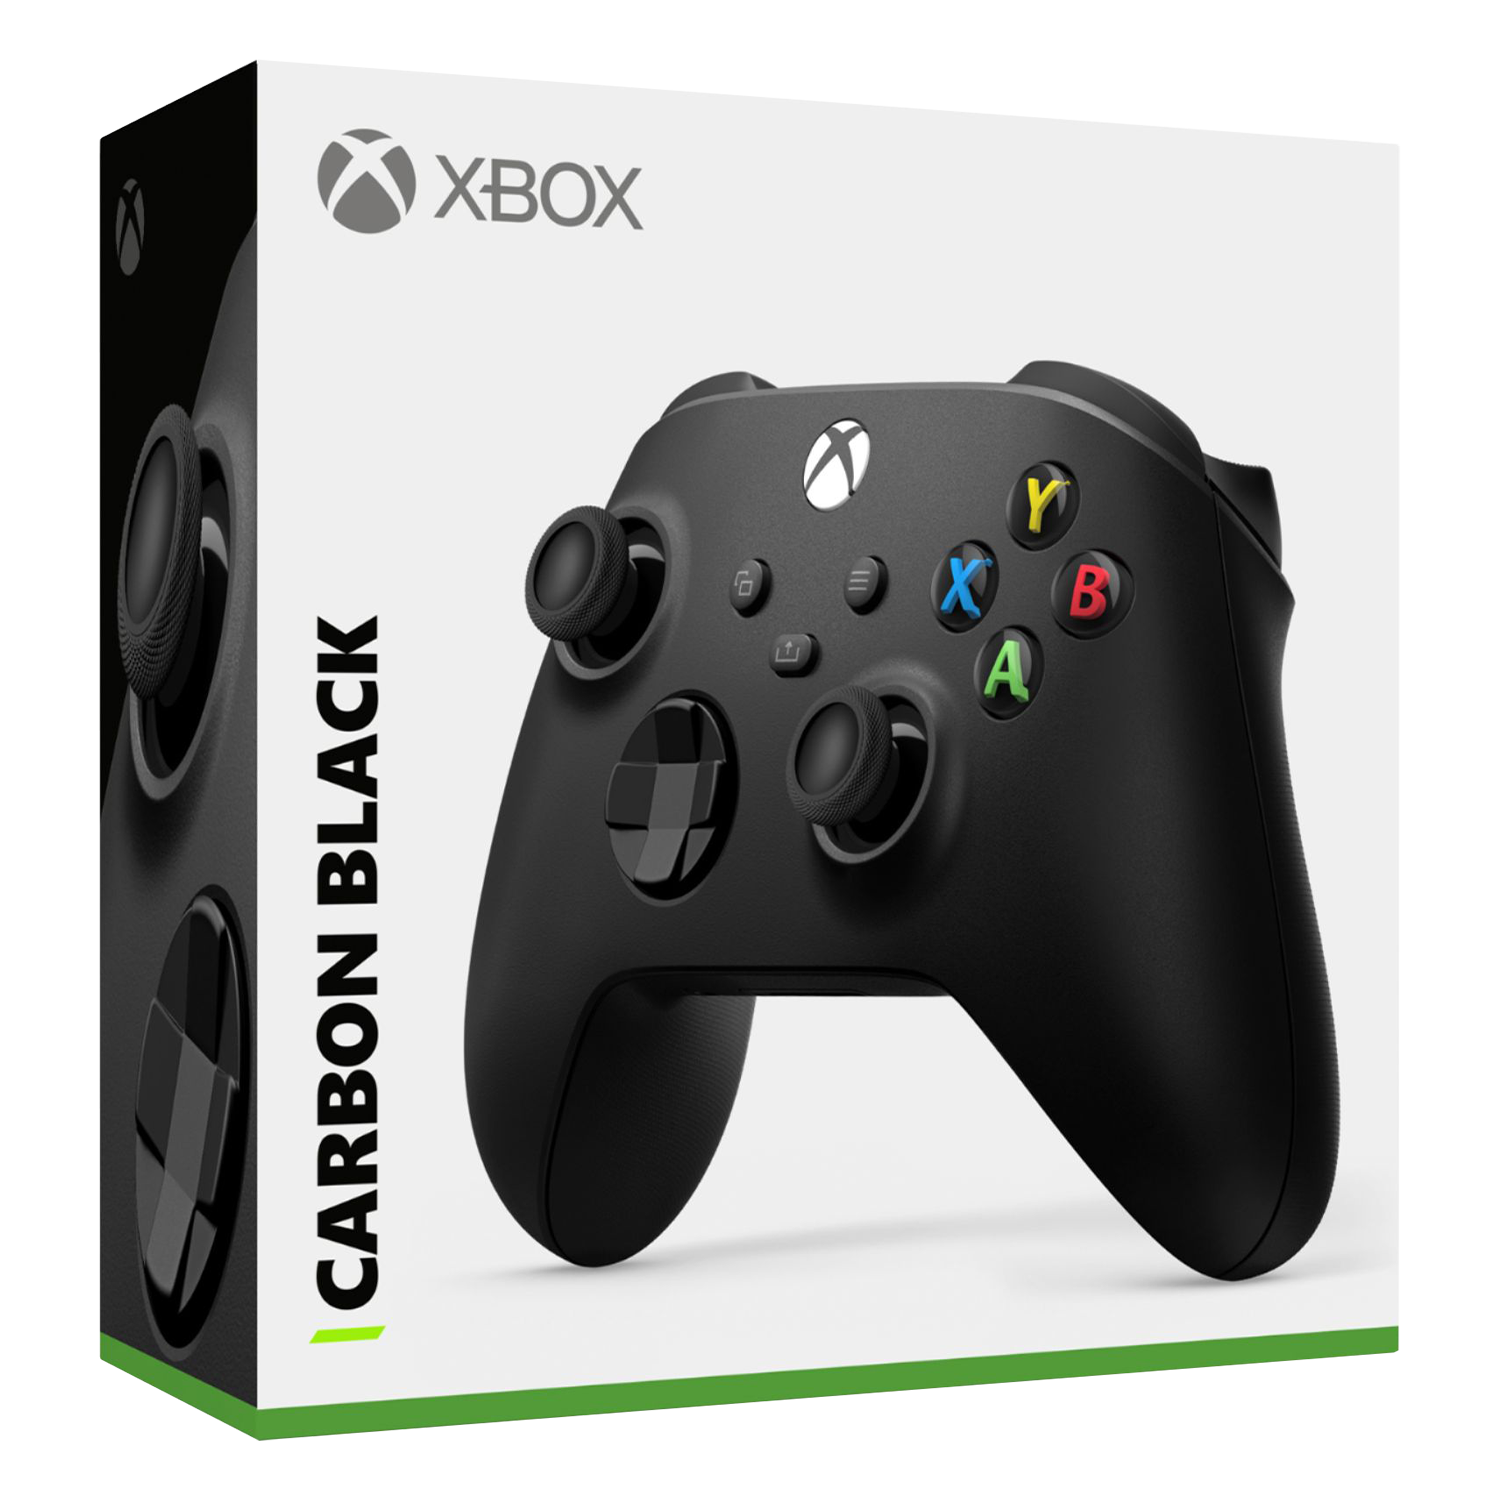 Controle Microsoft Wireless para Xbox One / X Series - Carbon Black (QAT-00007)